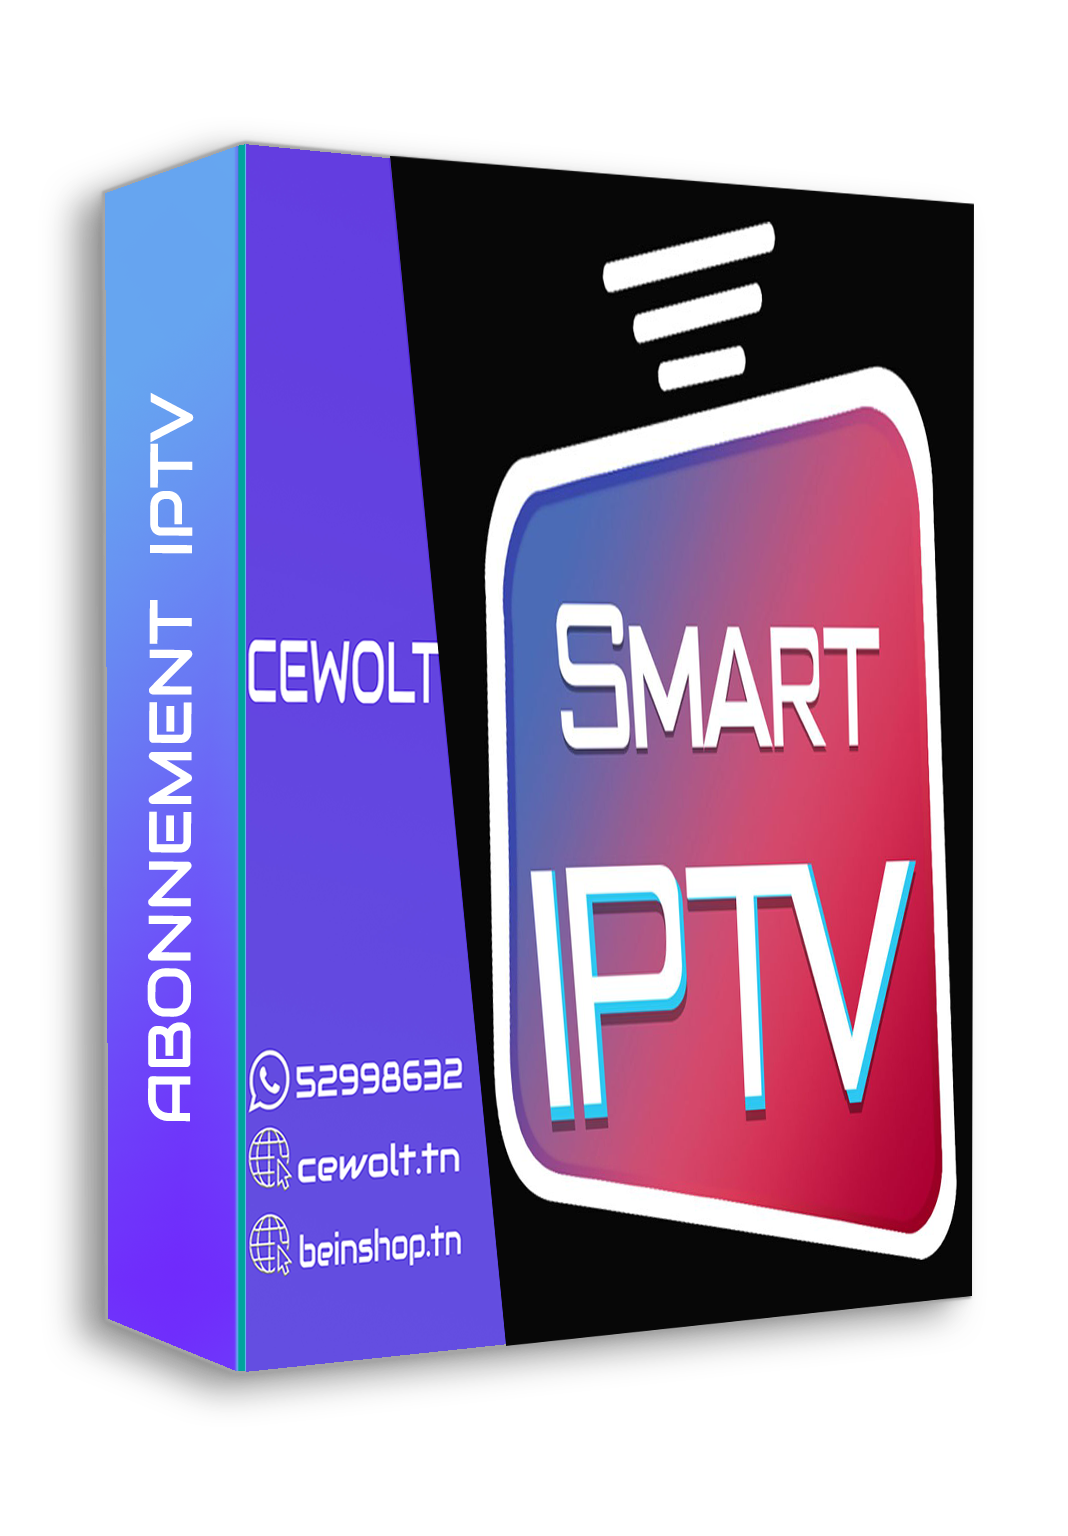 Abonnement IPTV Premium 12 mois Smart TV - Cdiscount TV Son Photo